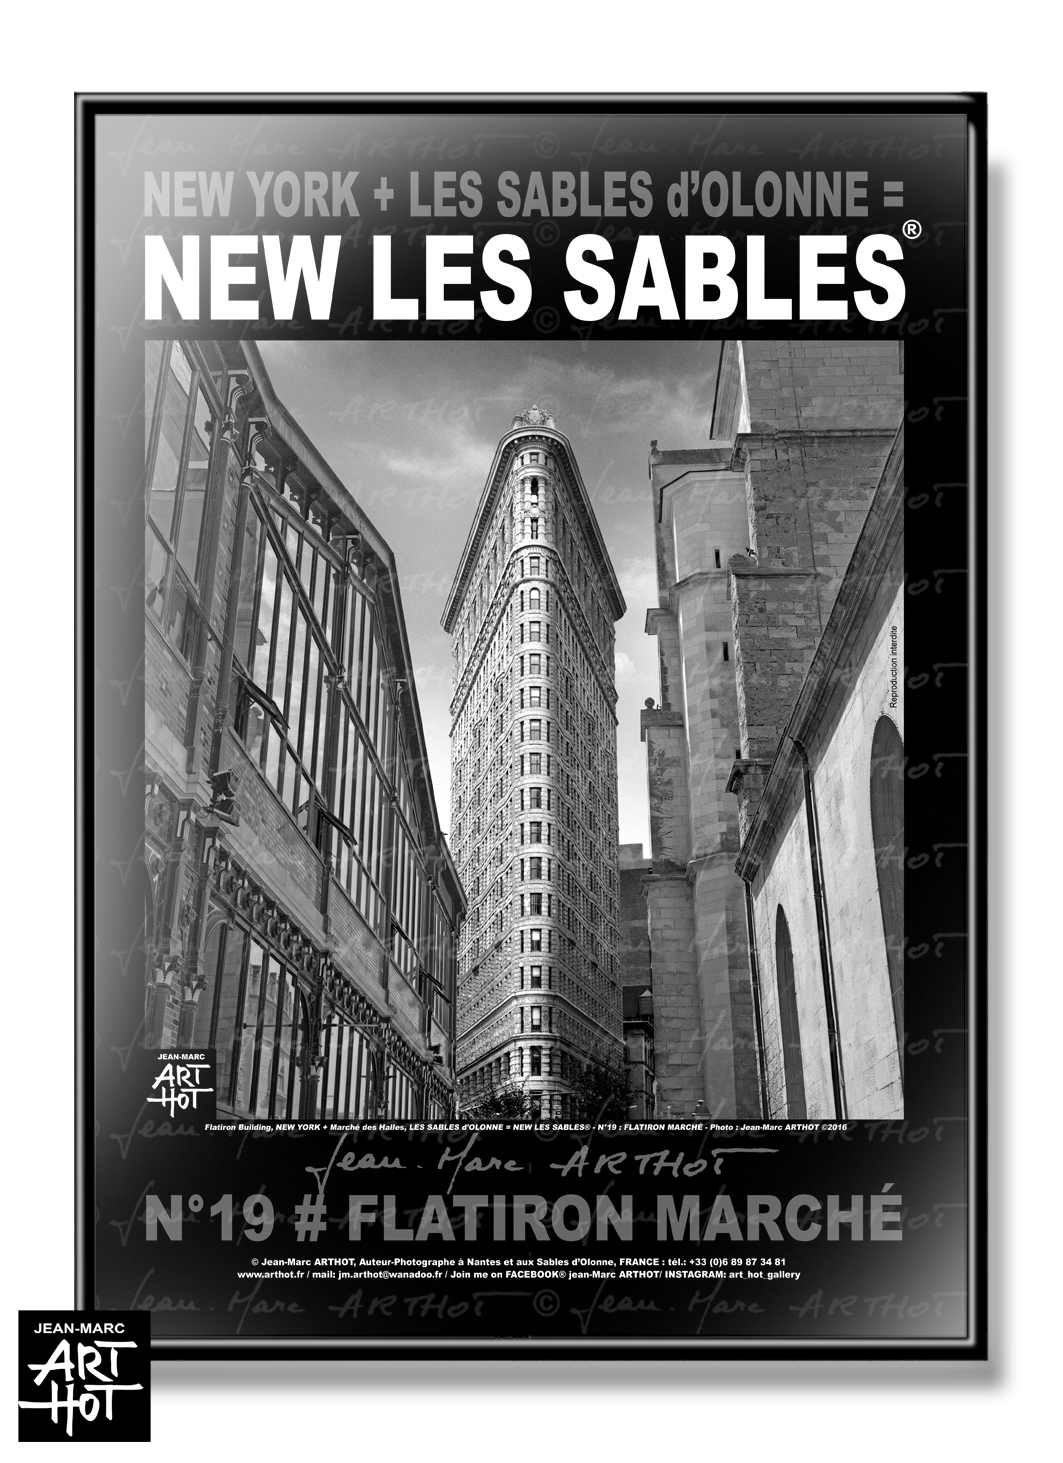 arthot-photo-art-b&w-new-york-vendee-sables-olonne-newlessables-019-marche-flatiron-AFFICHE